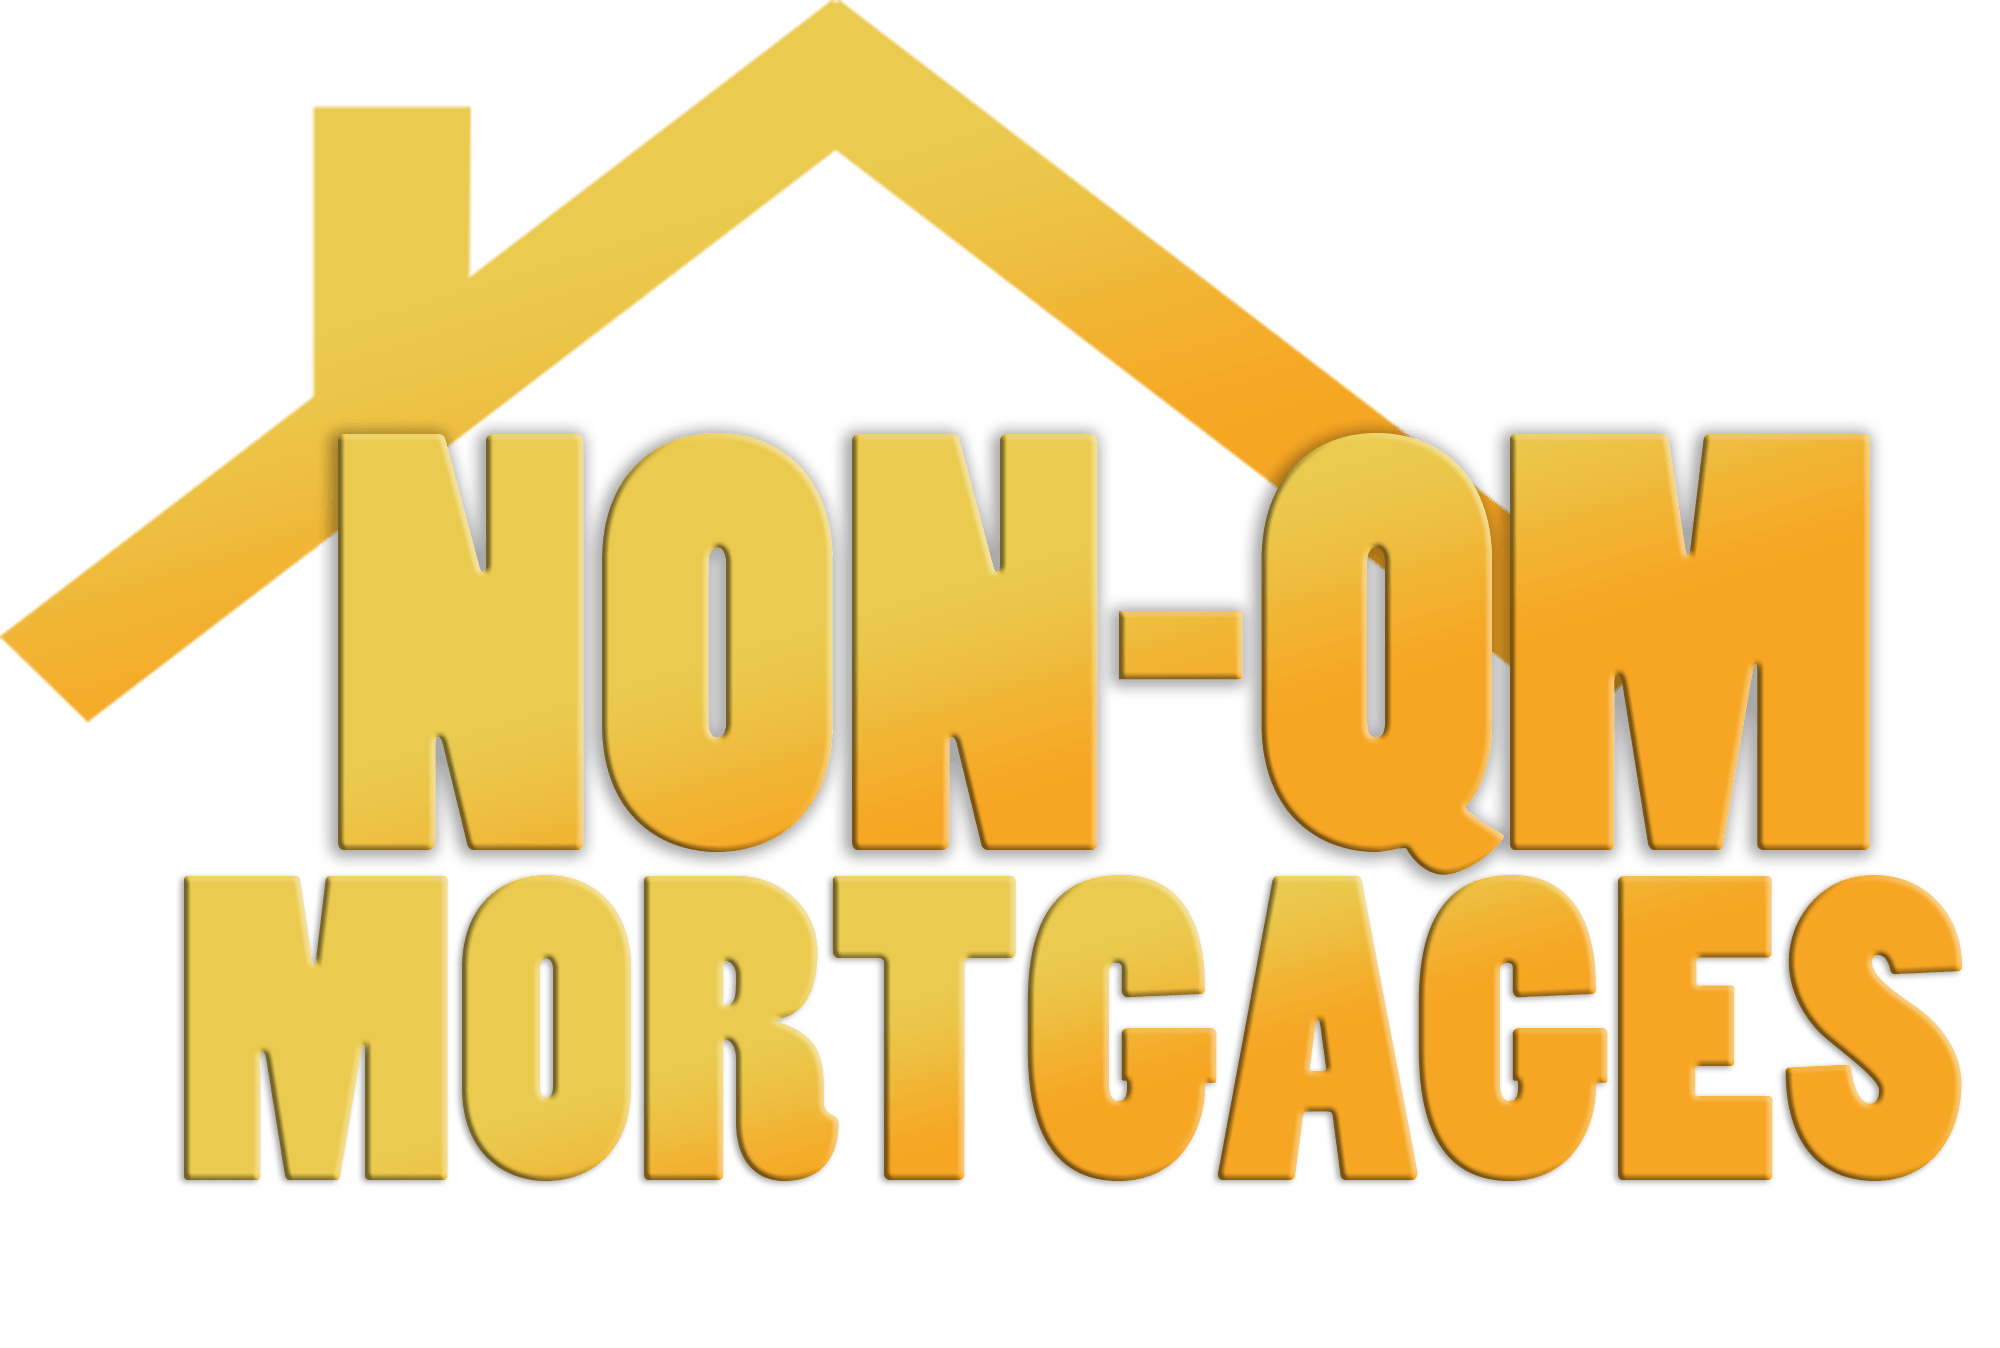 QM Logo - Non QM Logo J Mortgage